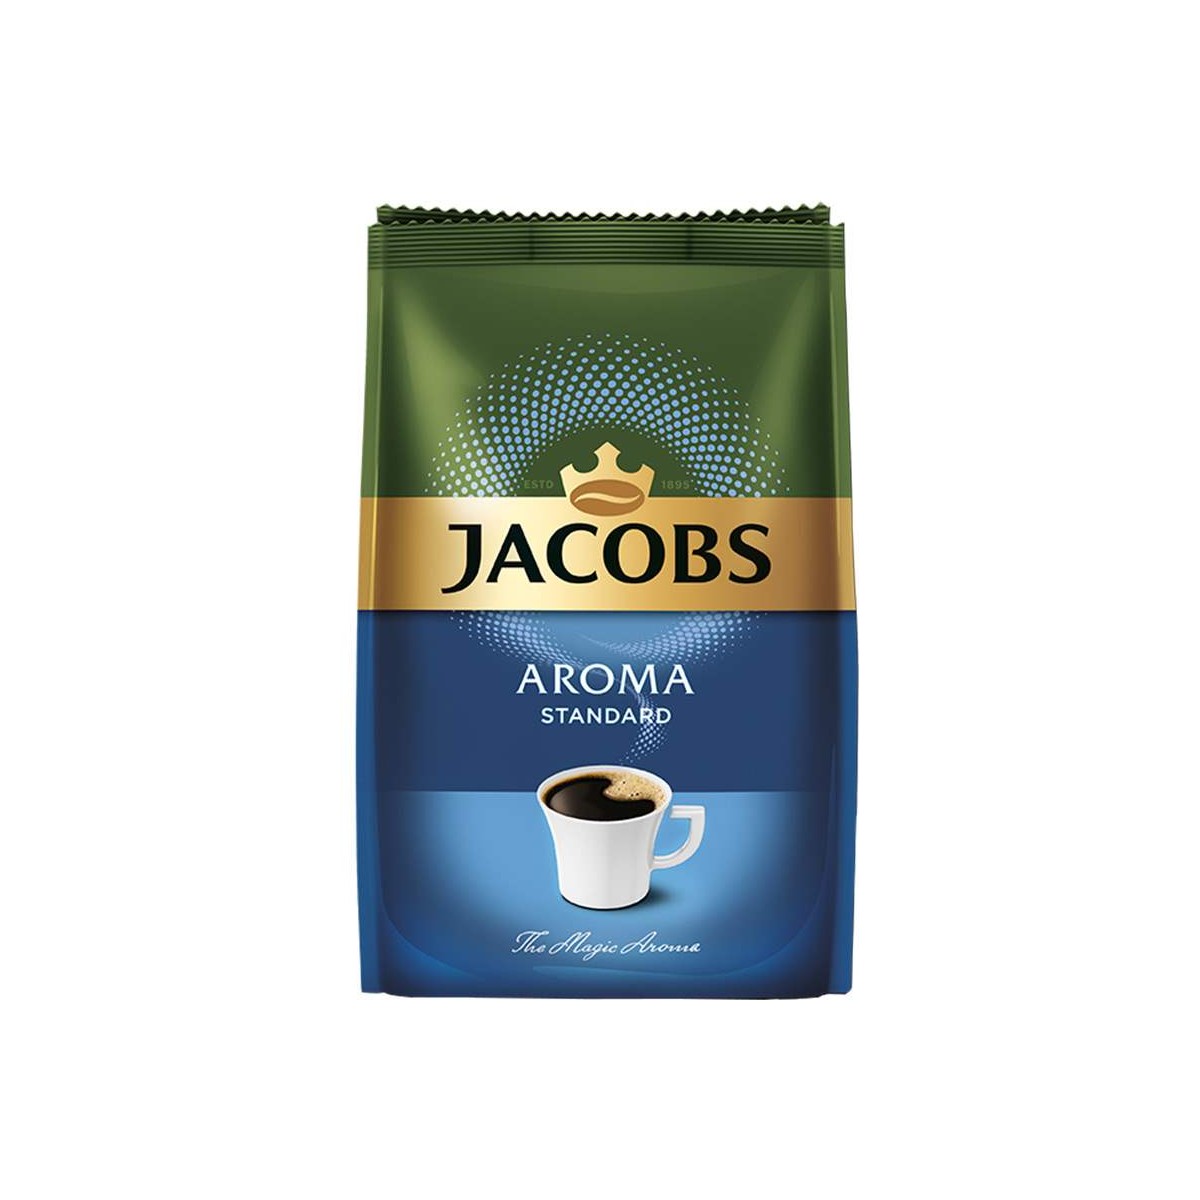 Jacobs Aroma Standard 150g